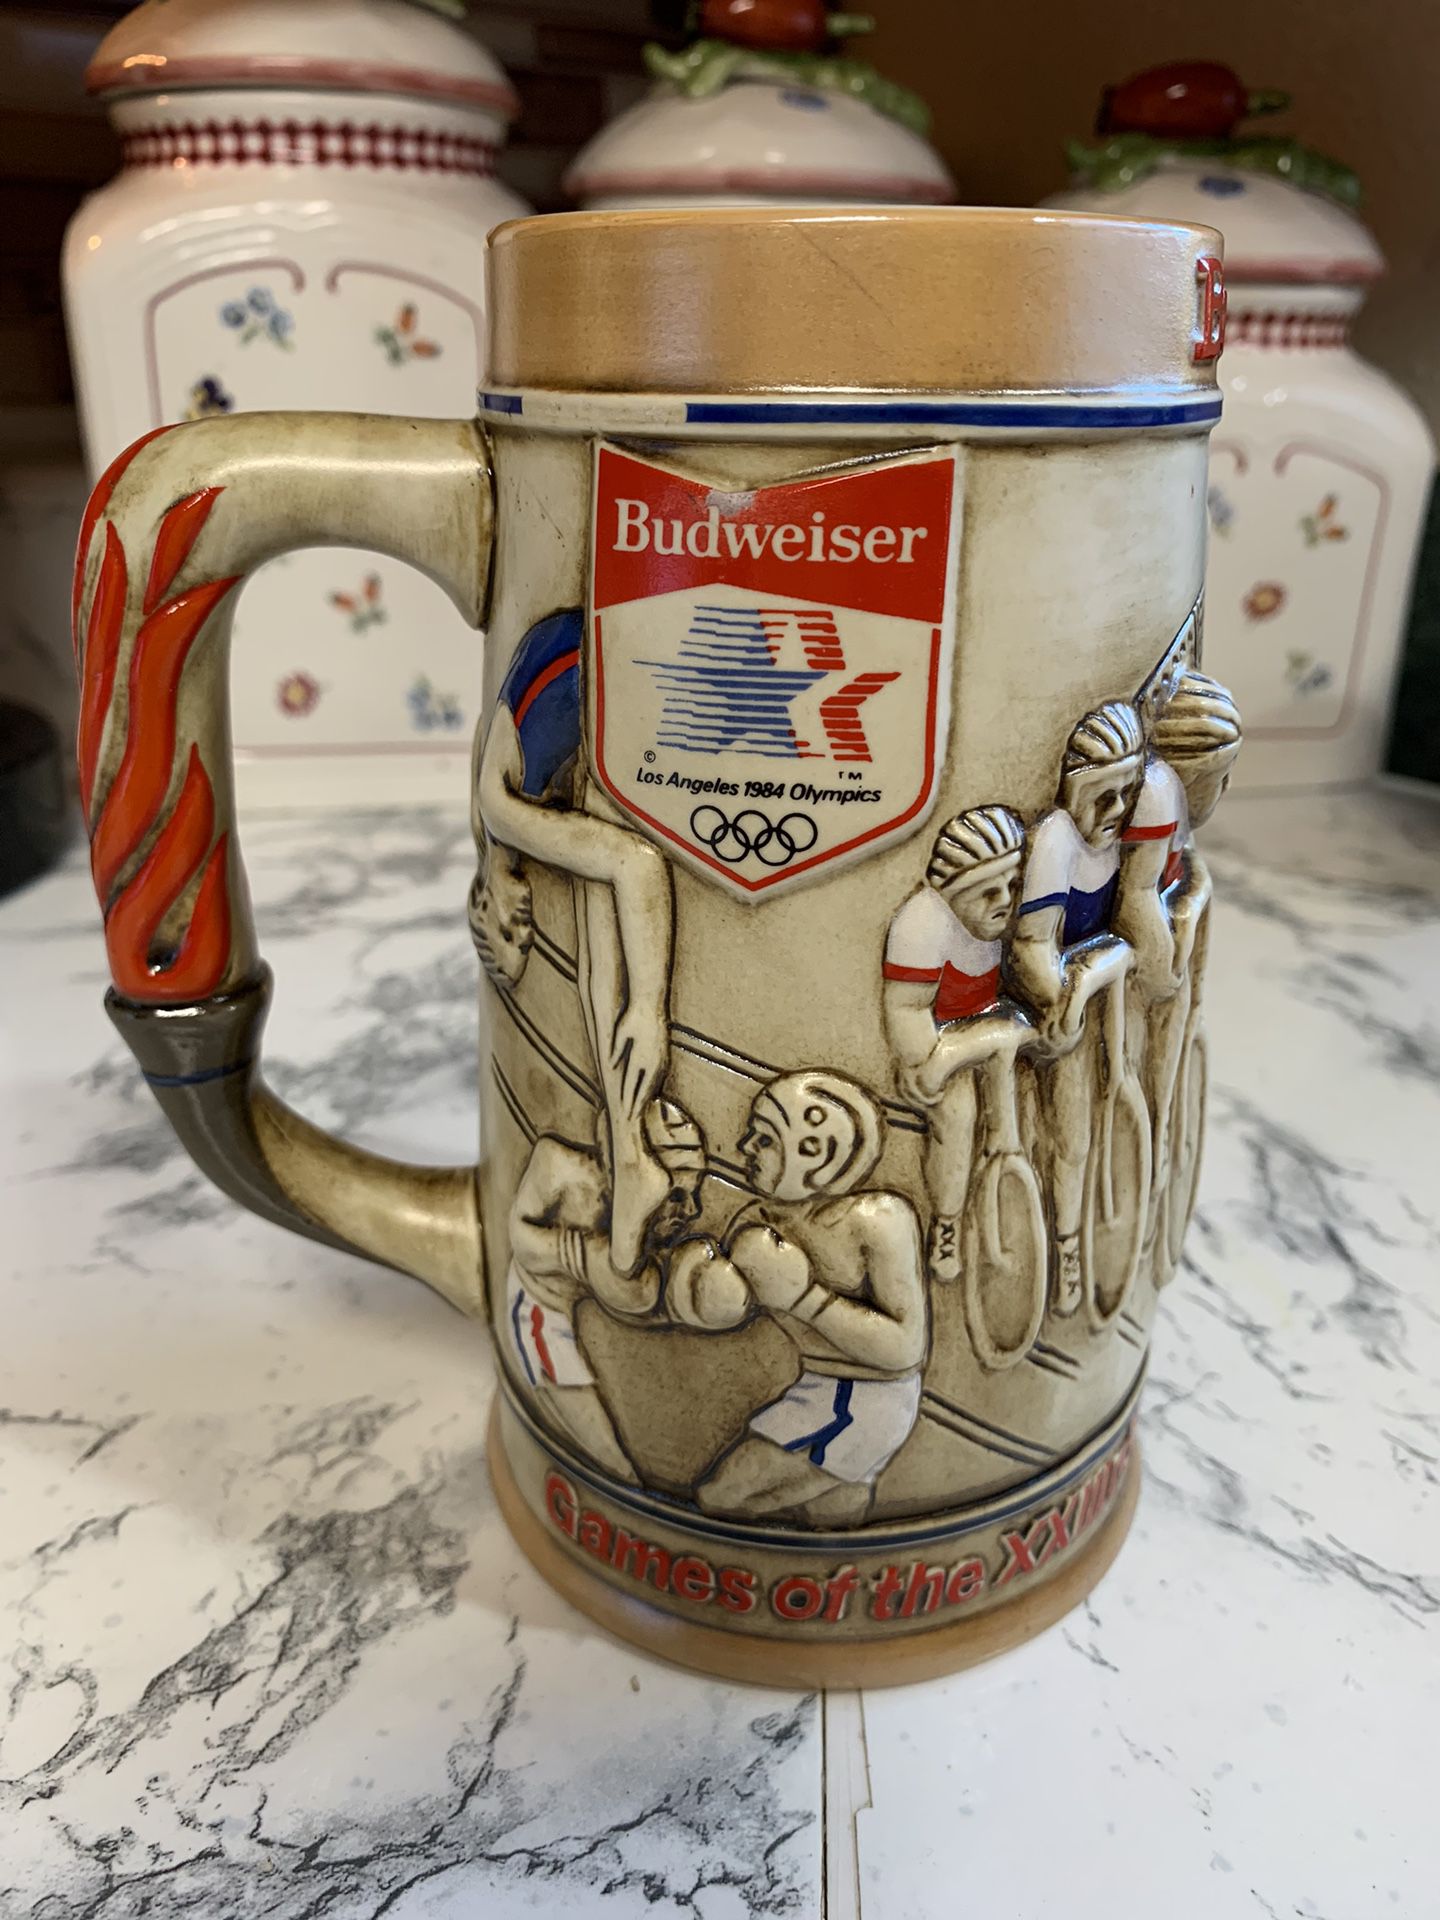   1984 Budweiser Los Angeles Olympic Ceramic Limited Series Beer Stein